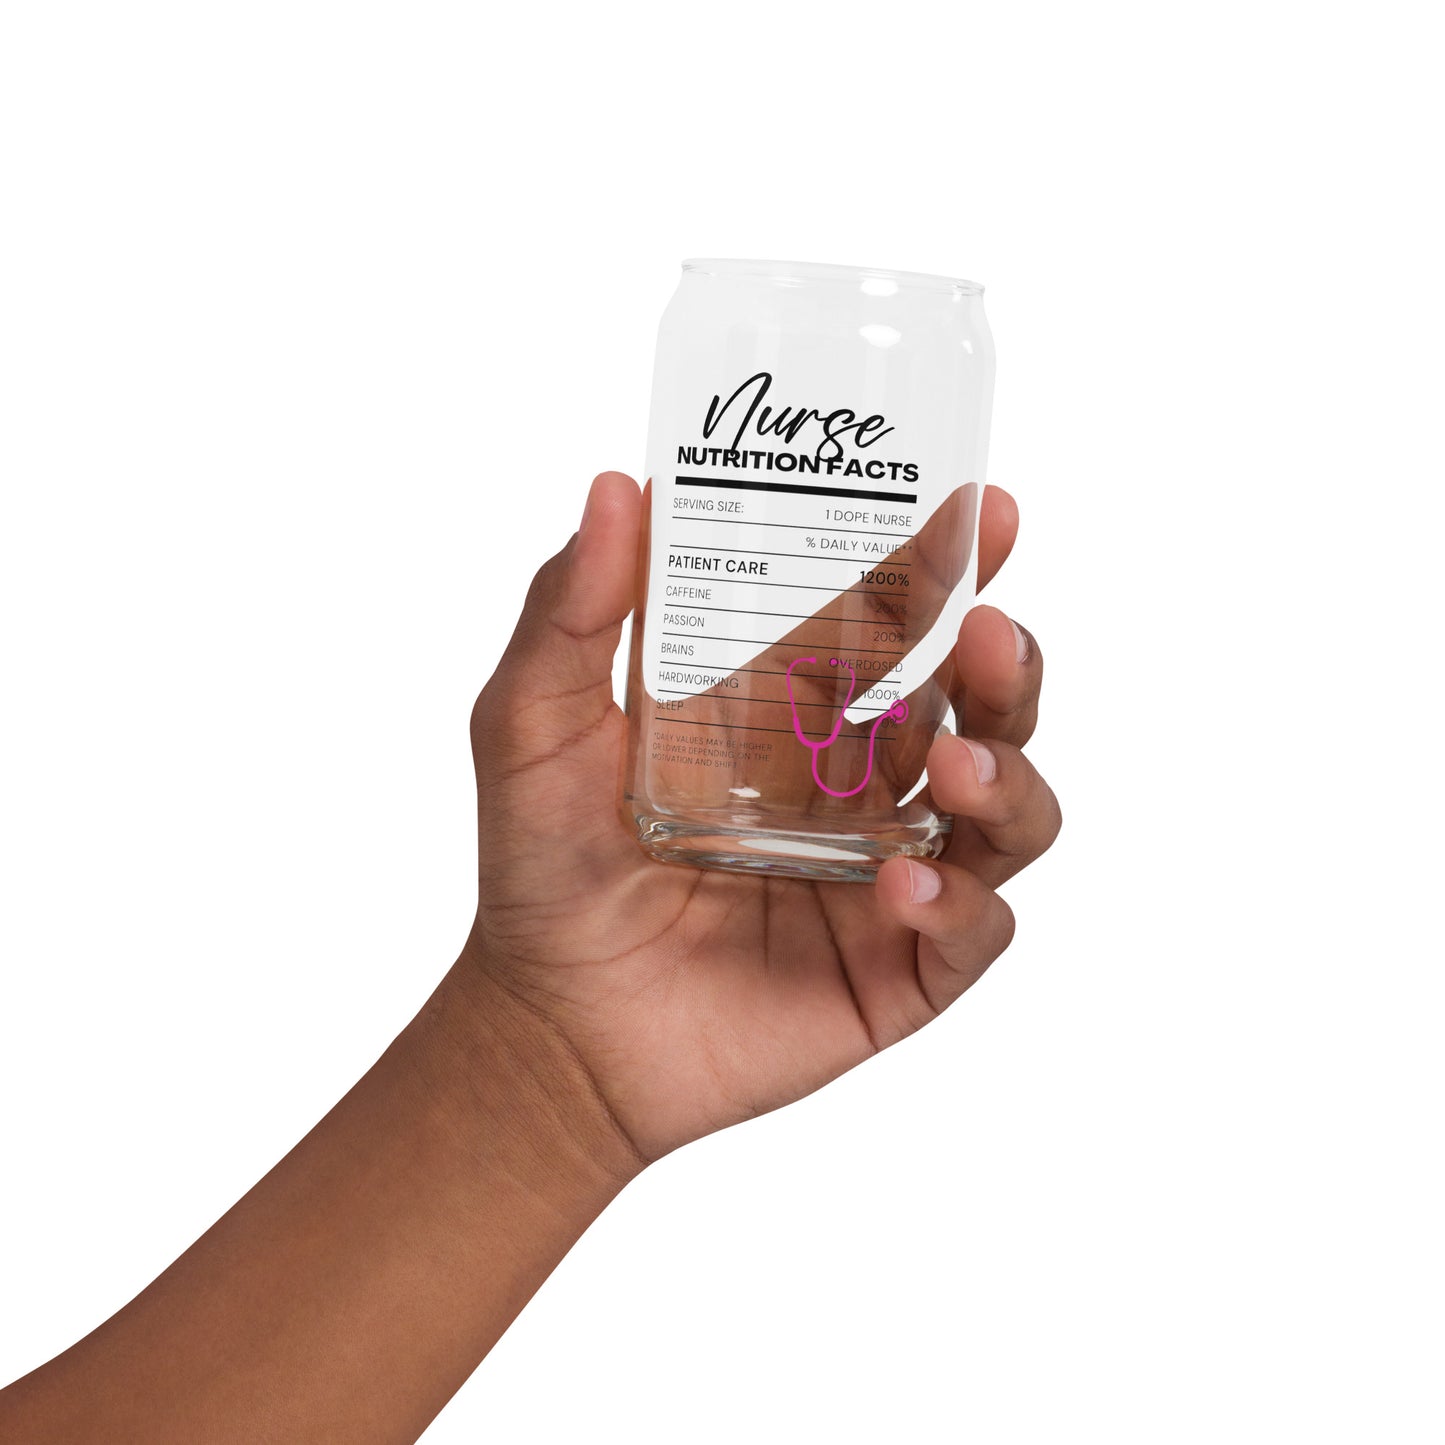 Nurse Nutrition FactsCan-shaped glass